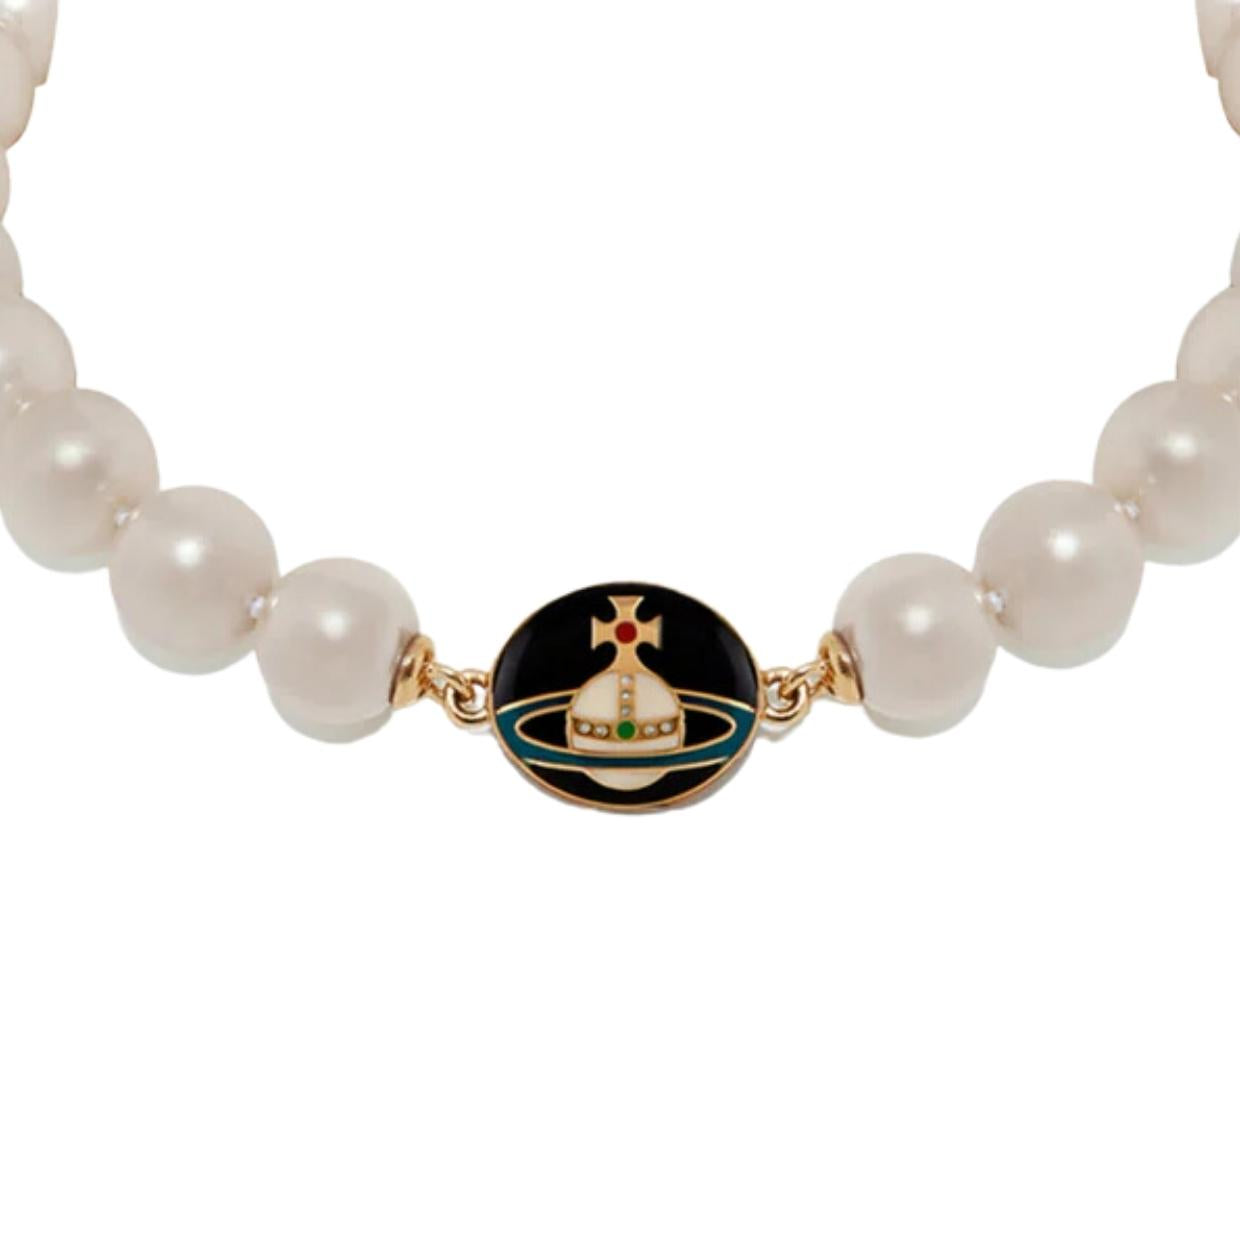 Vivienne Westwood Loelia Large Pearl Necklace